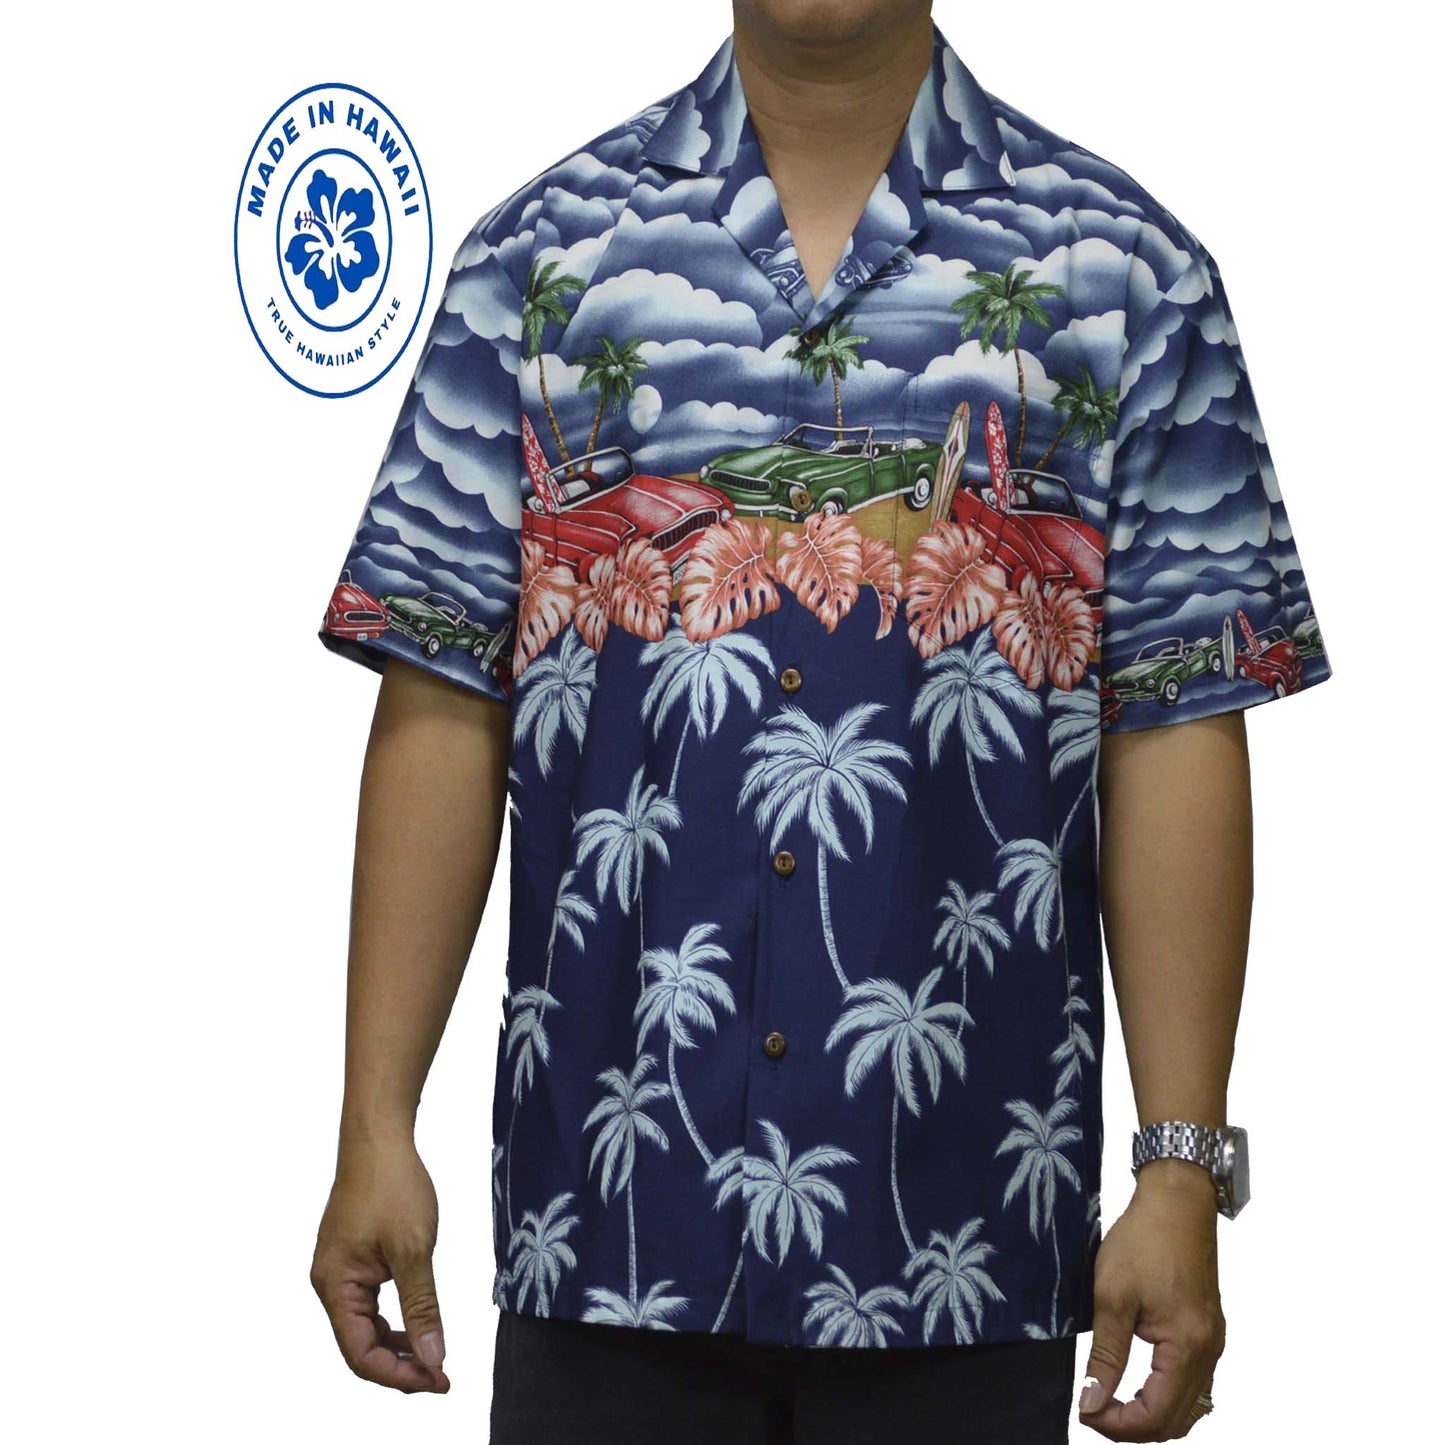 made in hawaii cotton shirt